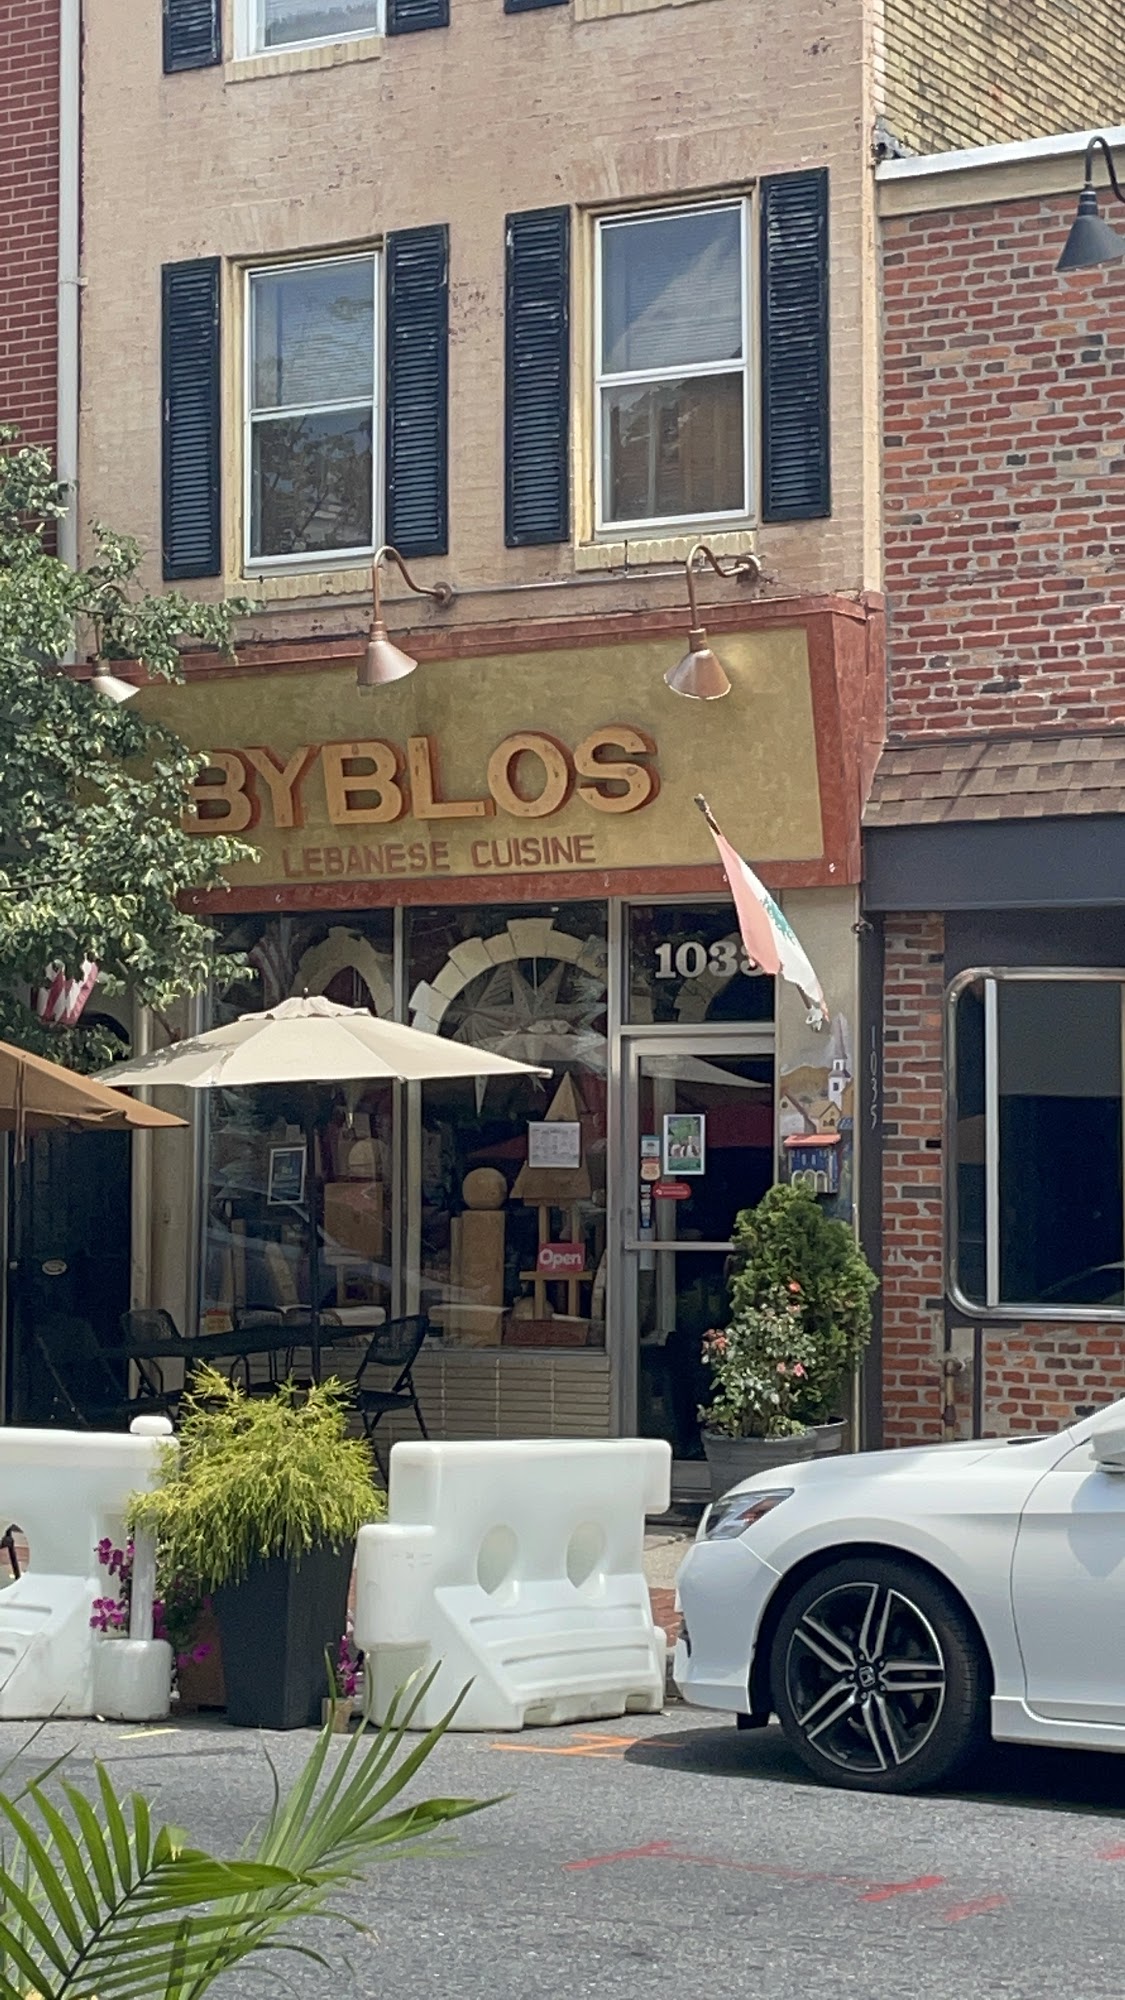 Byblos Lebanese Cuisine